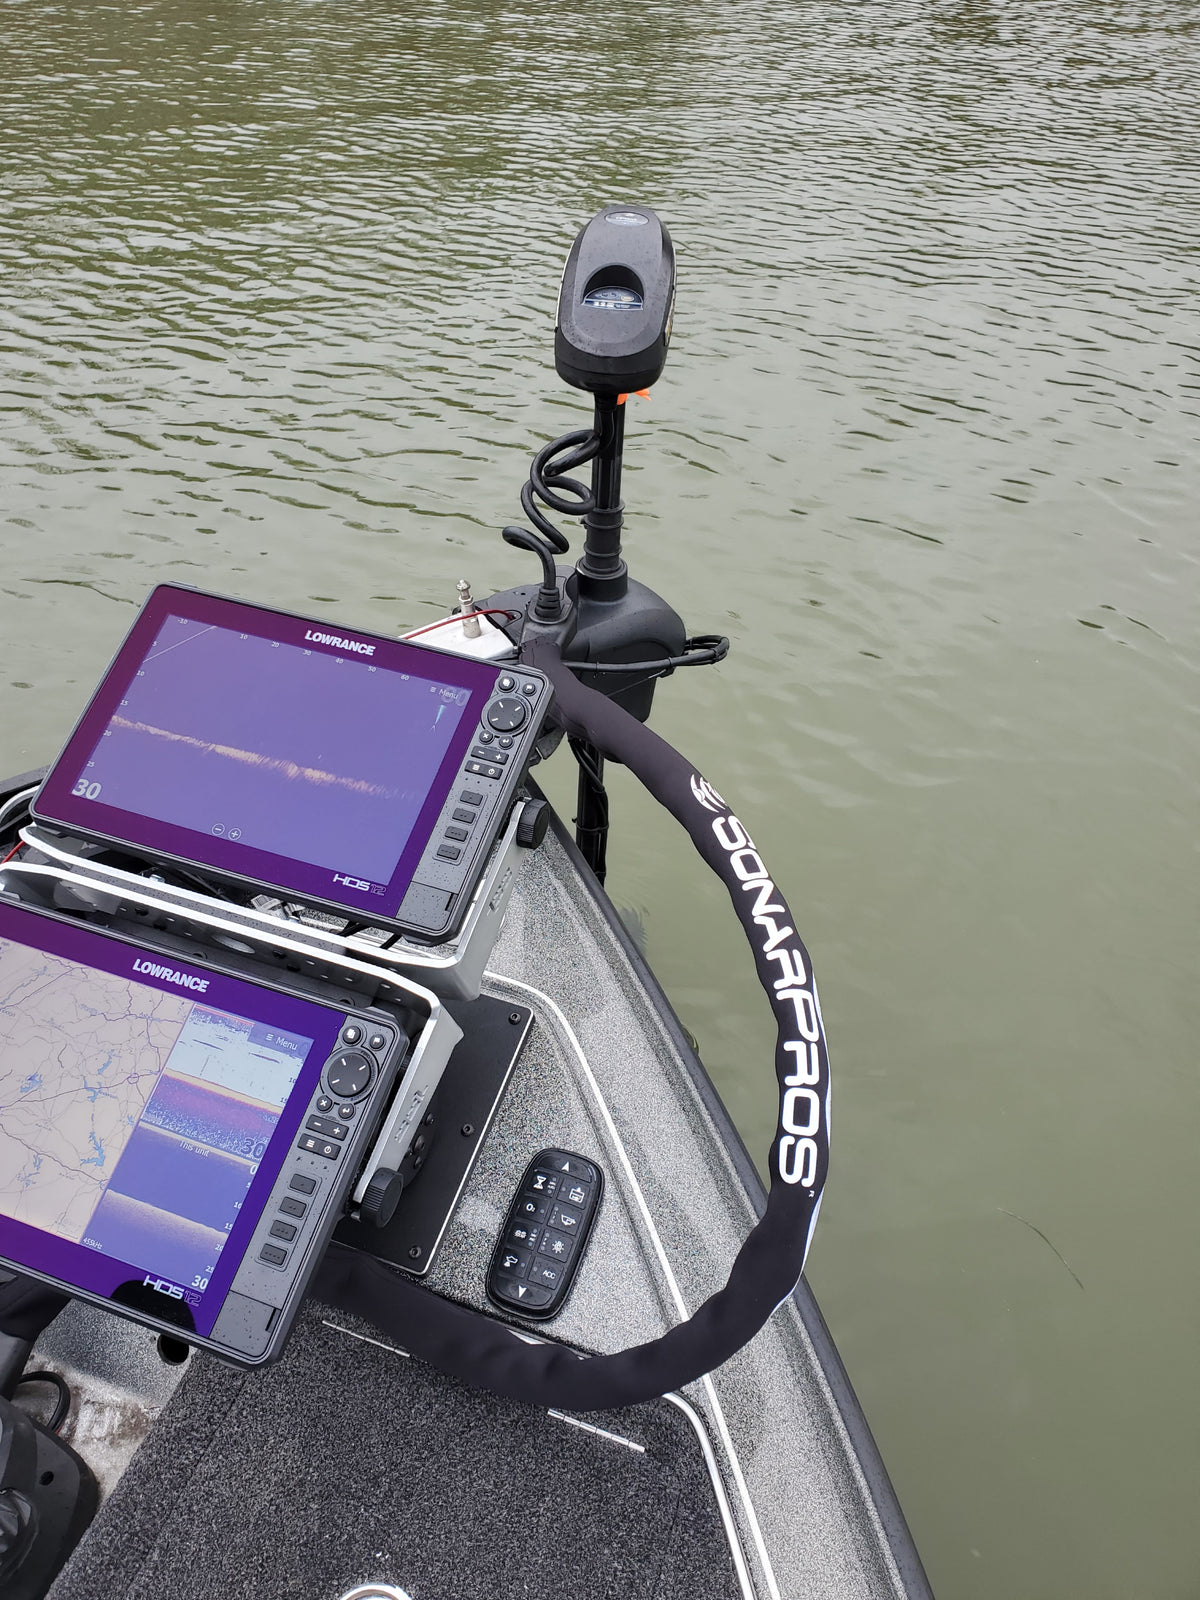  CHICIRIS Durable Rotation Sonar Mount Strong Metal ABS Fishing  Sonar Mount for Marine Electronics : Electrónica